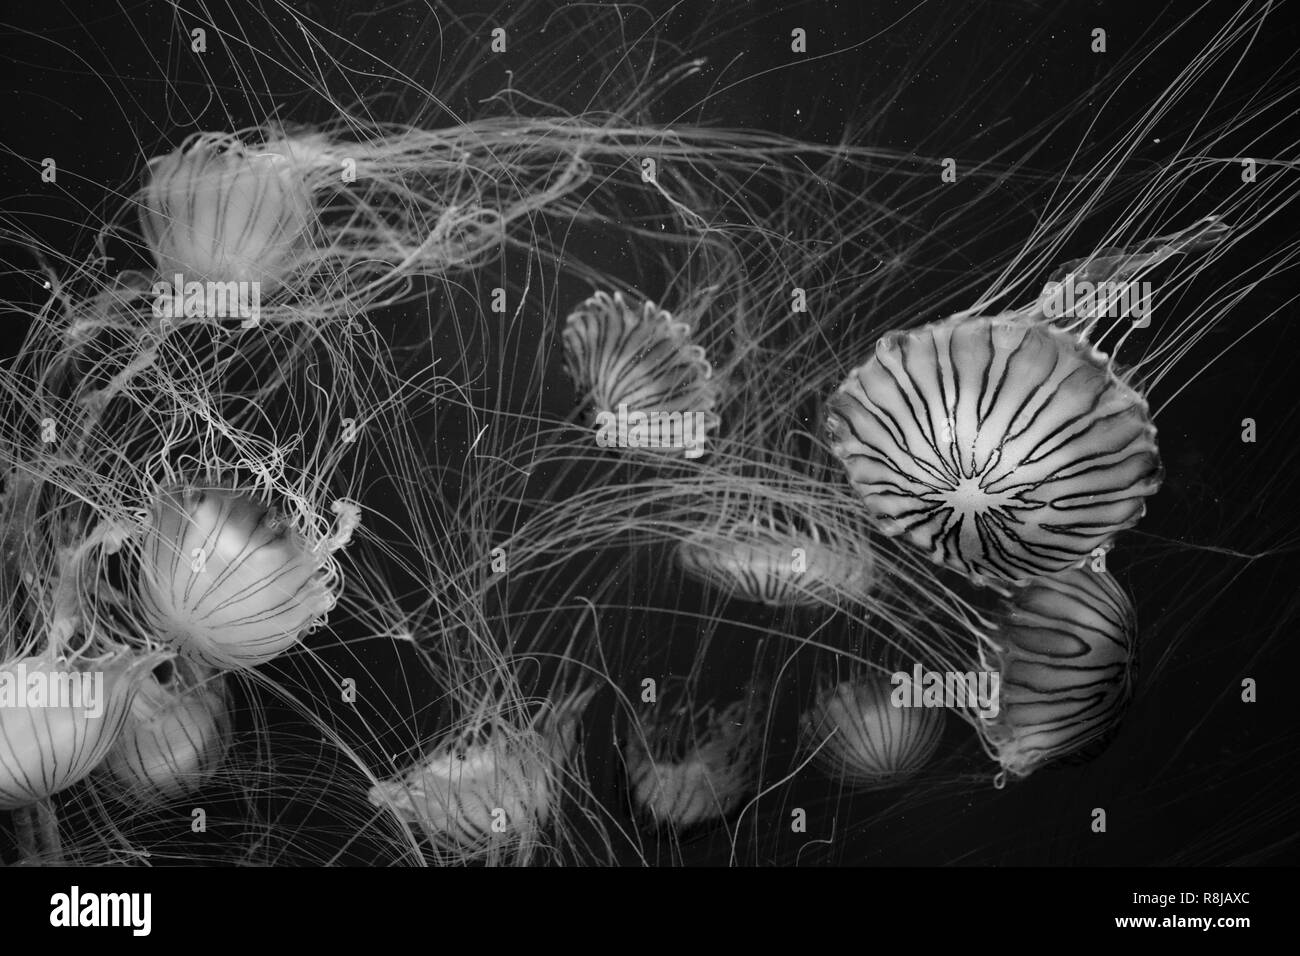 jellyfishes Stock Photo